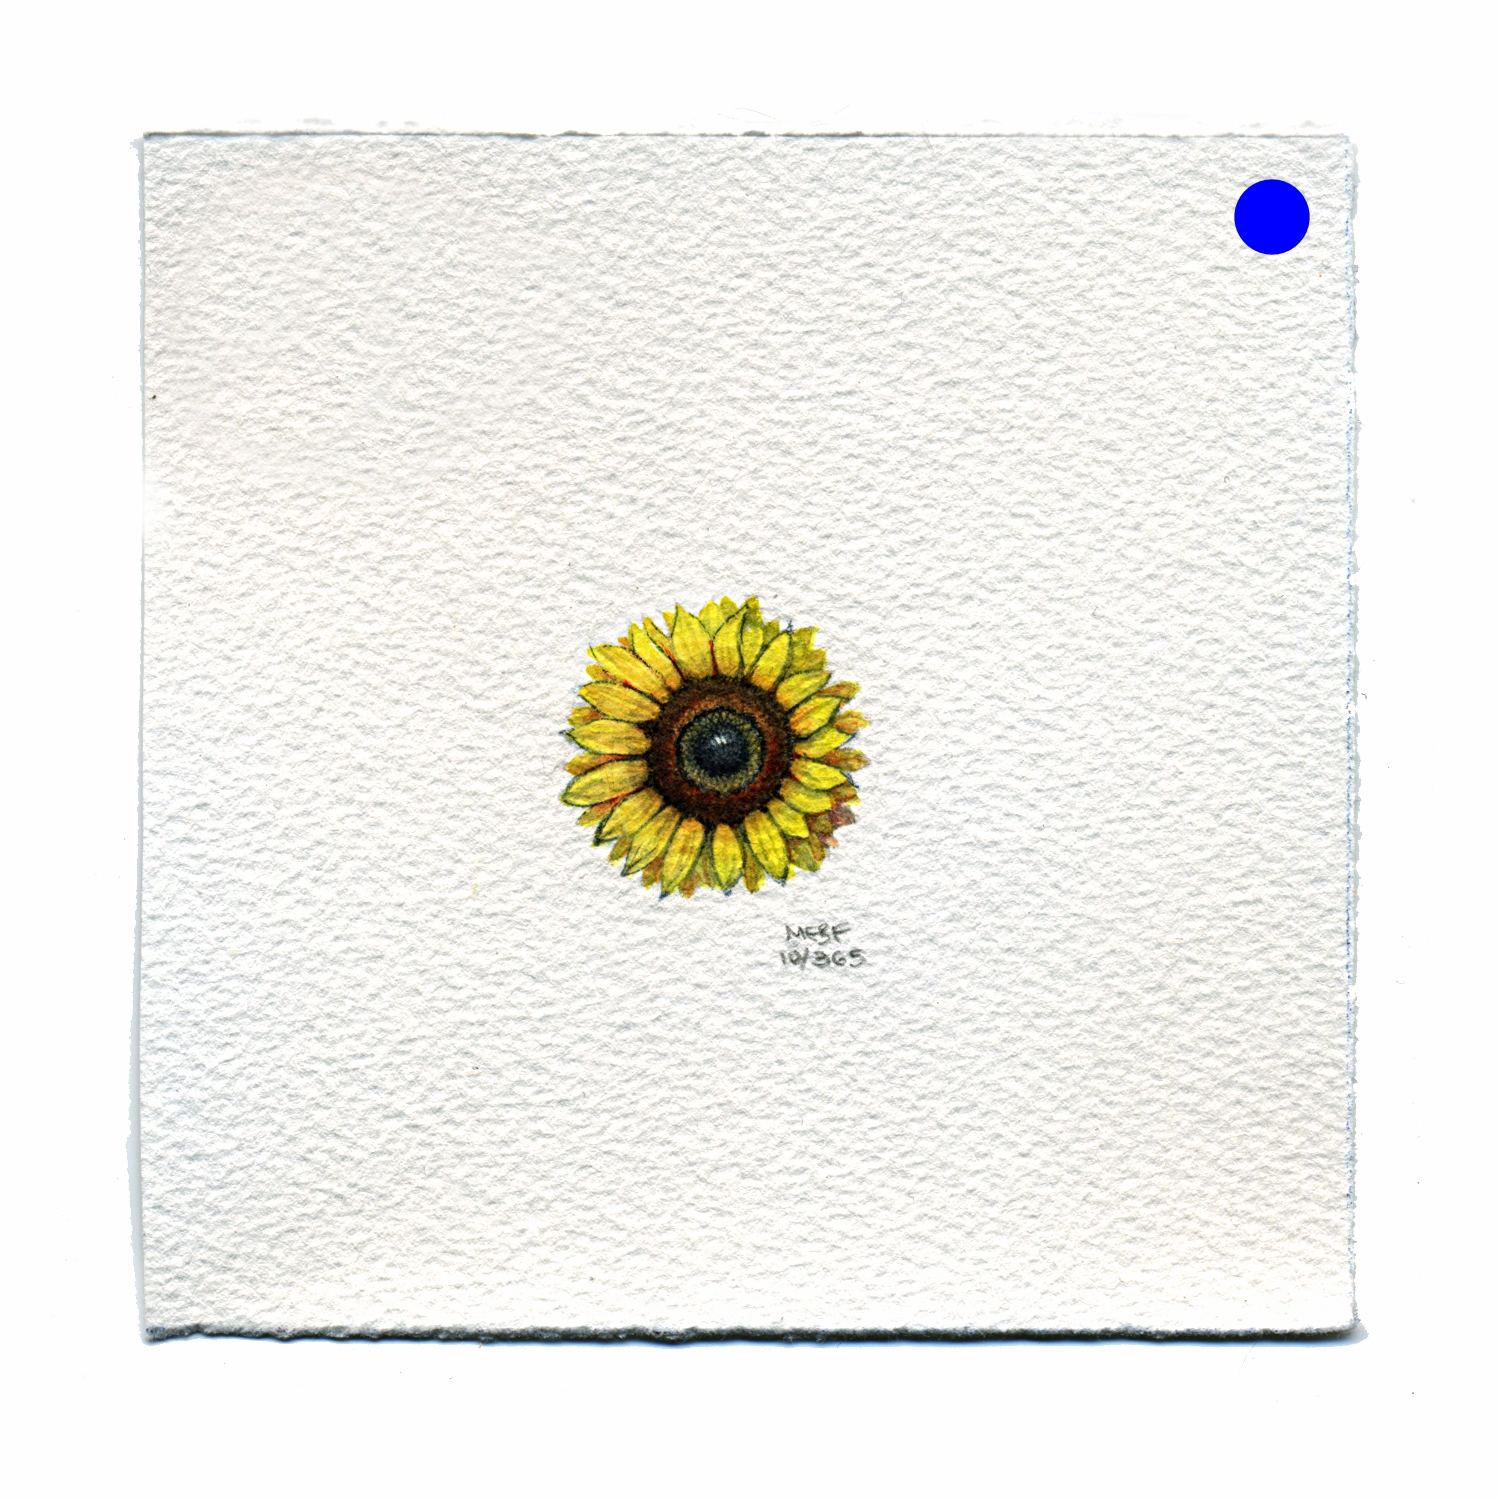 draw10_sunflower.jpg